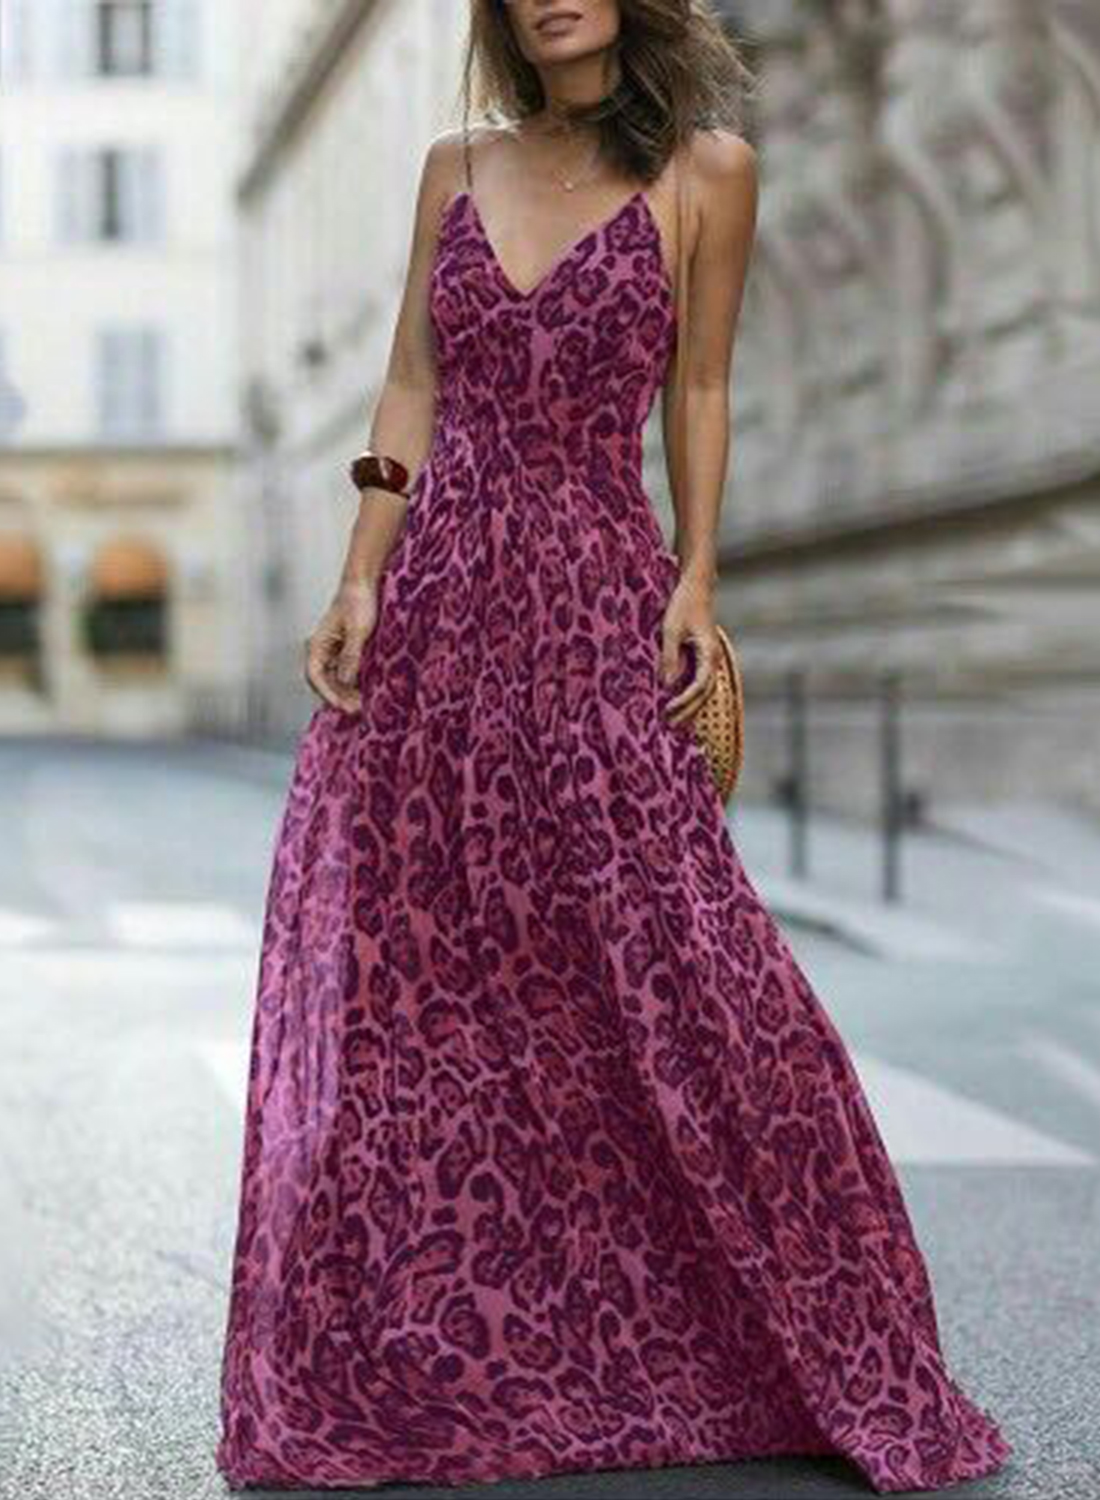 leopard spaghetti strap dress